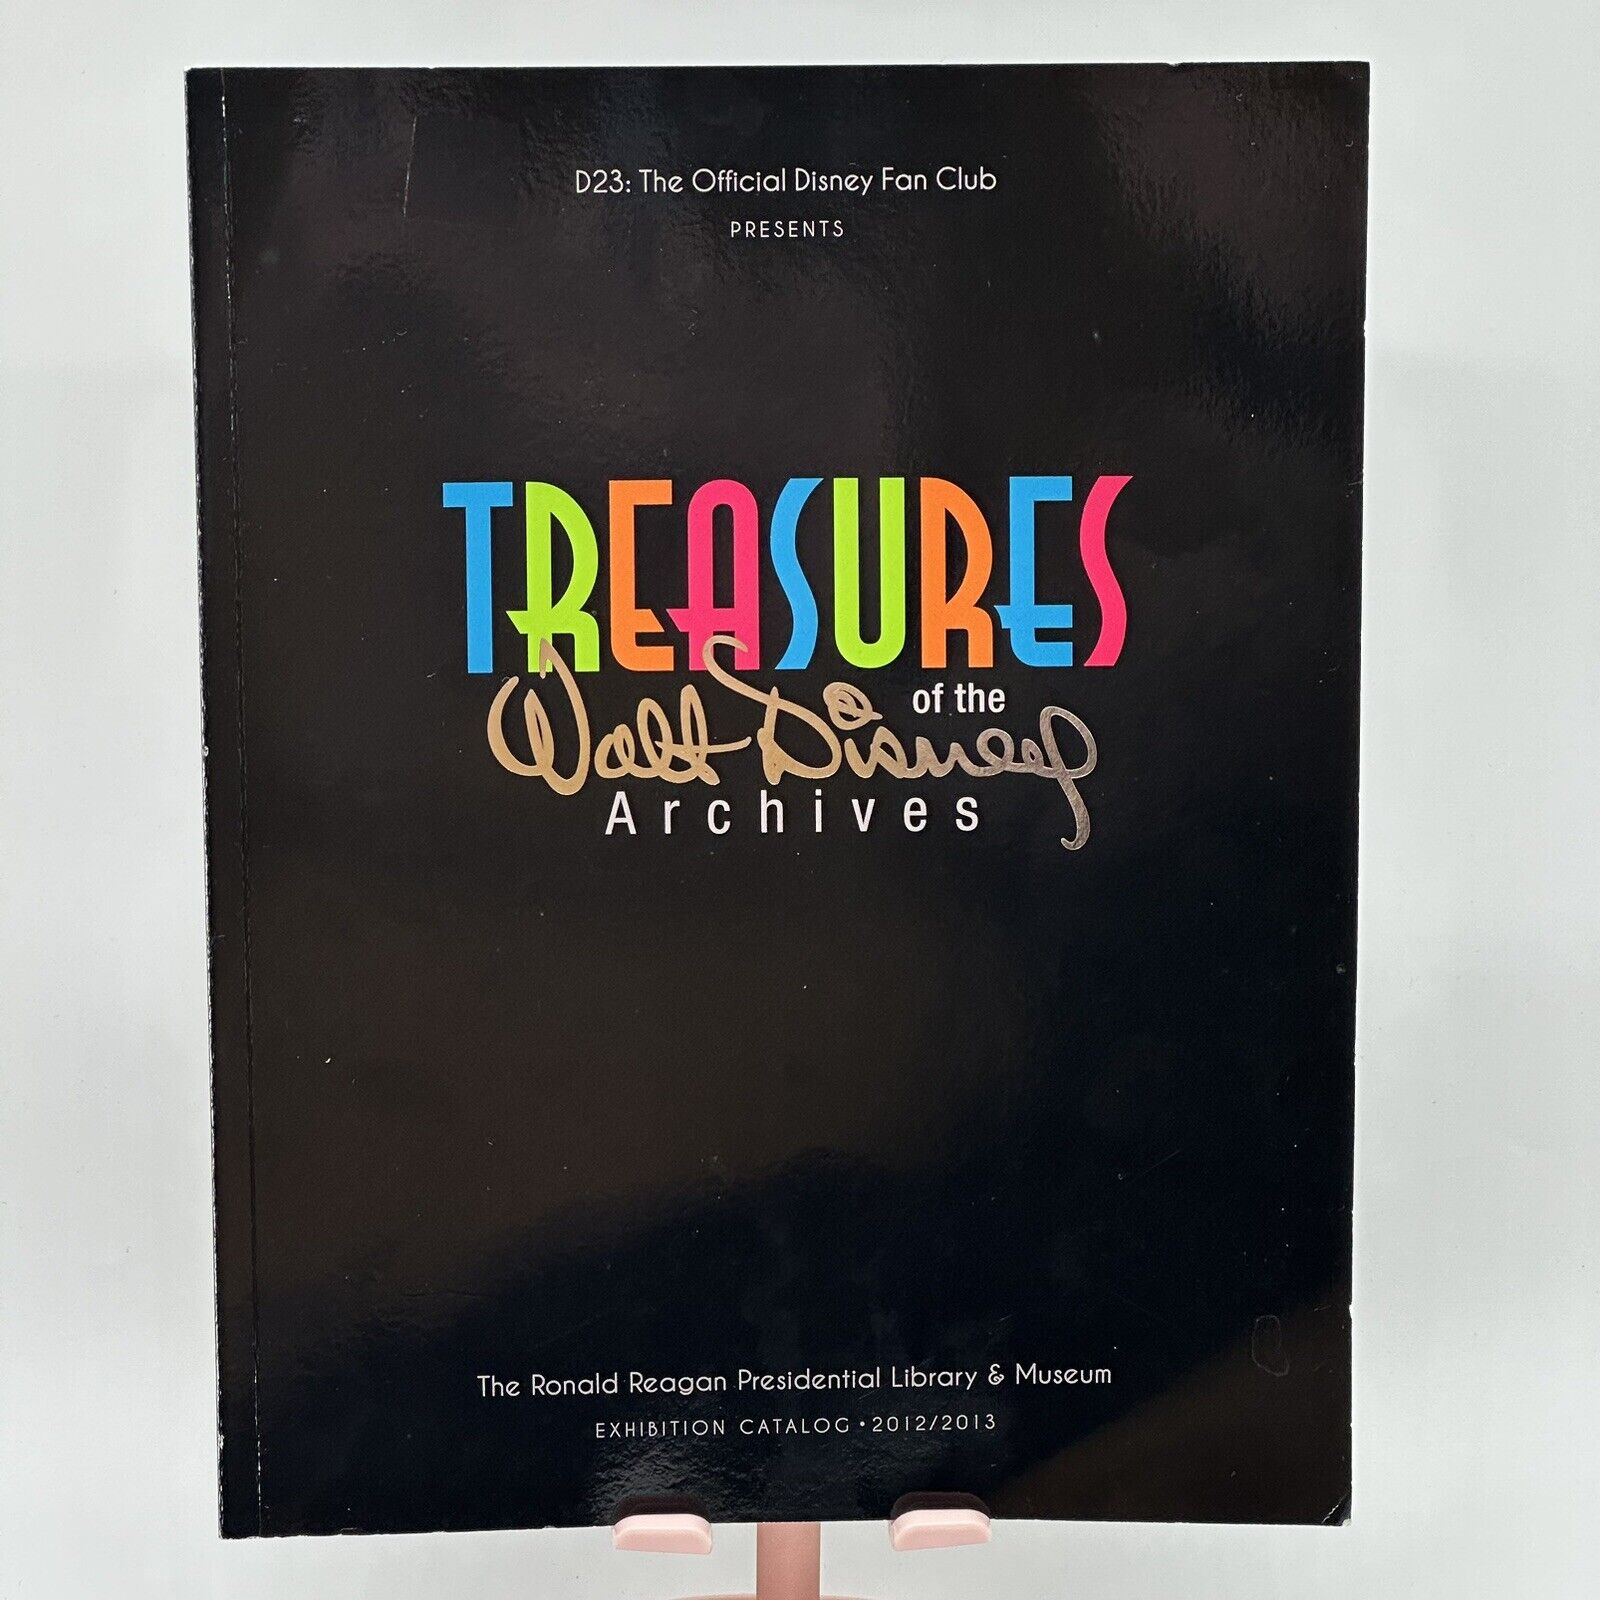 Treasures Of The Walt Disney Archives D23 Fan Club Exhibition Catalog 2012/2013